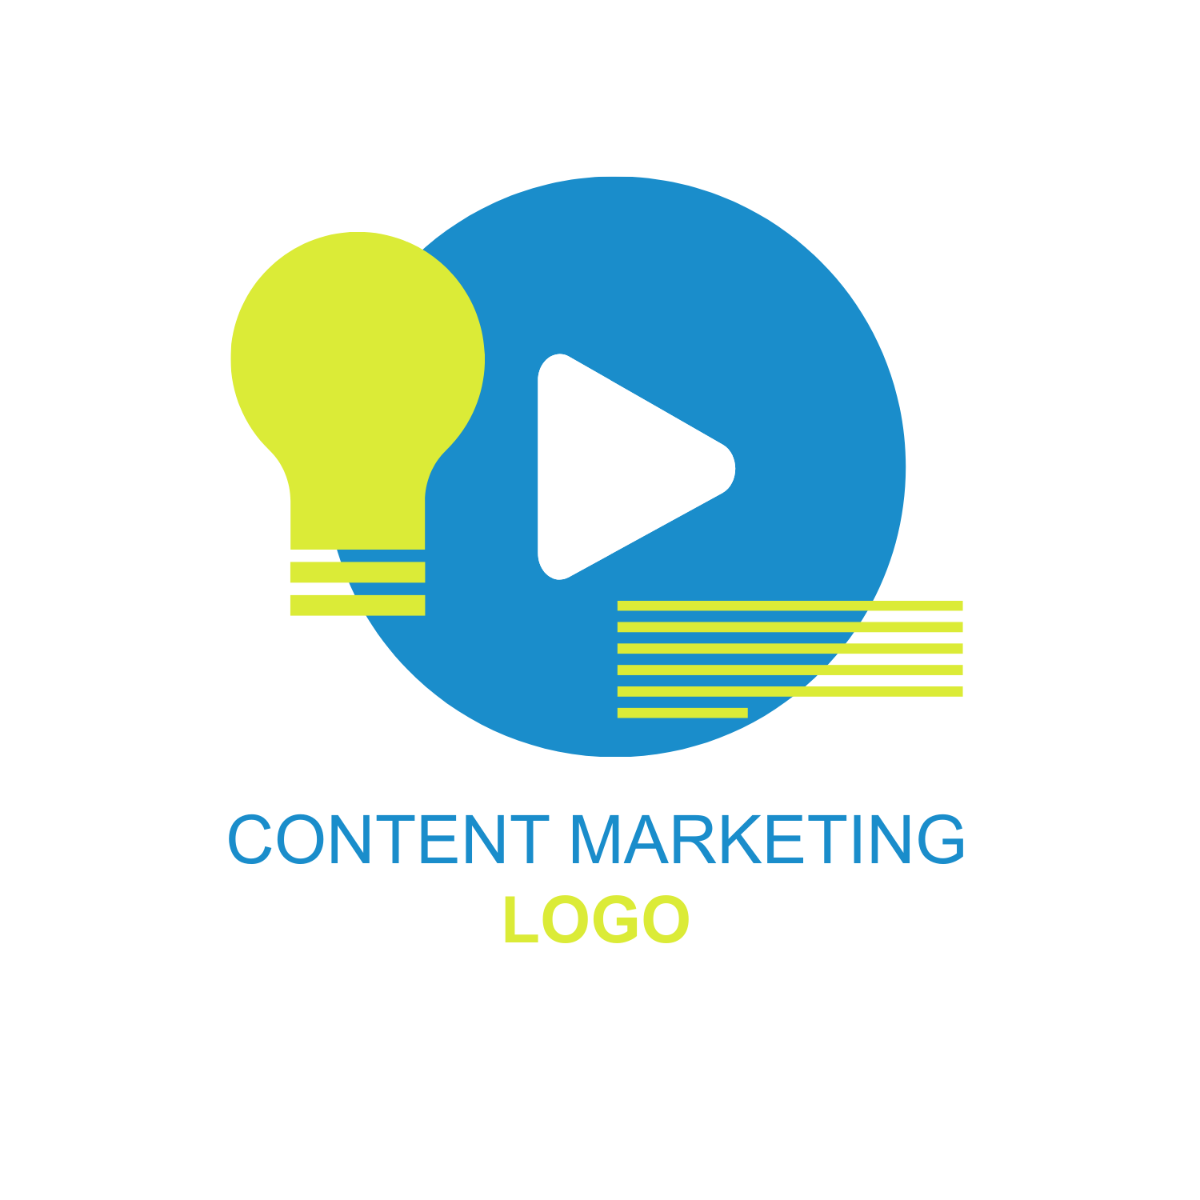 Content Marketing Logo Template